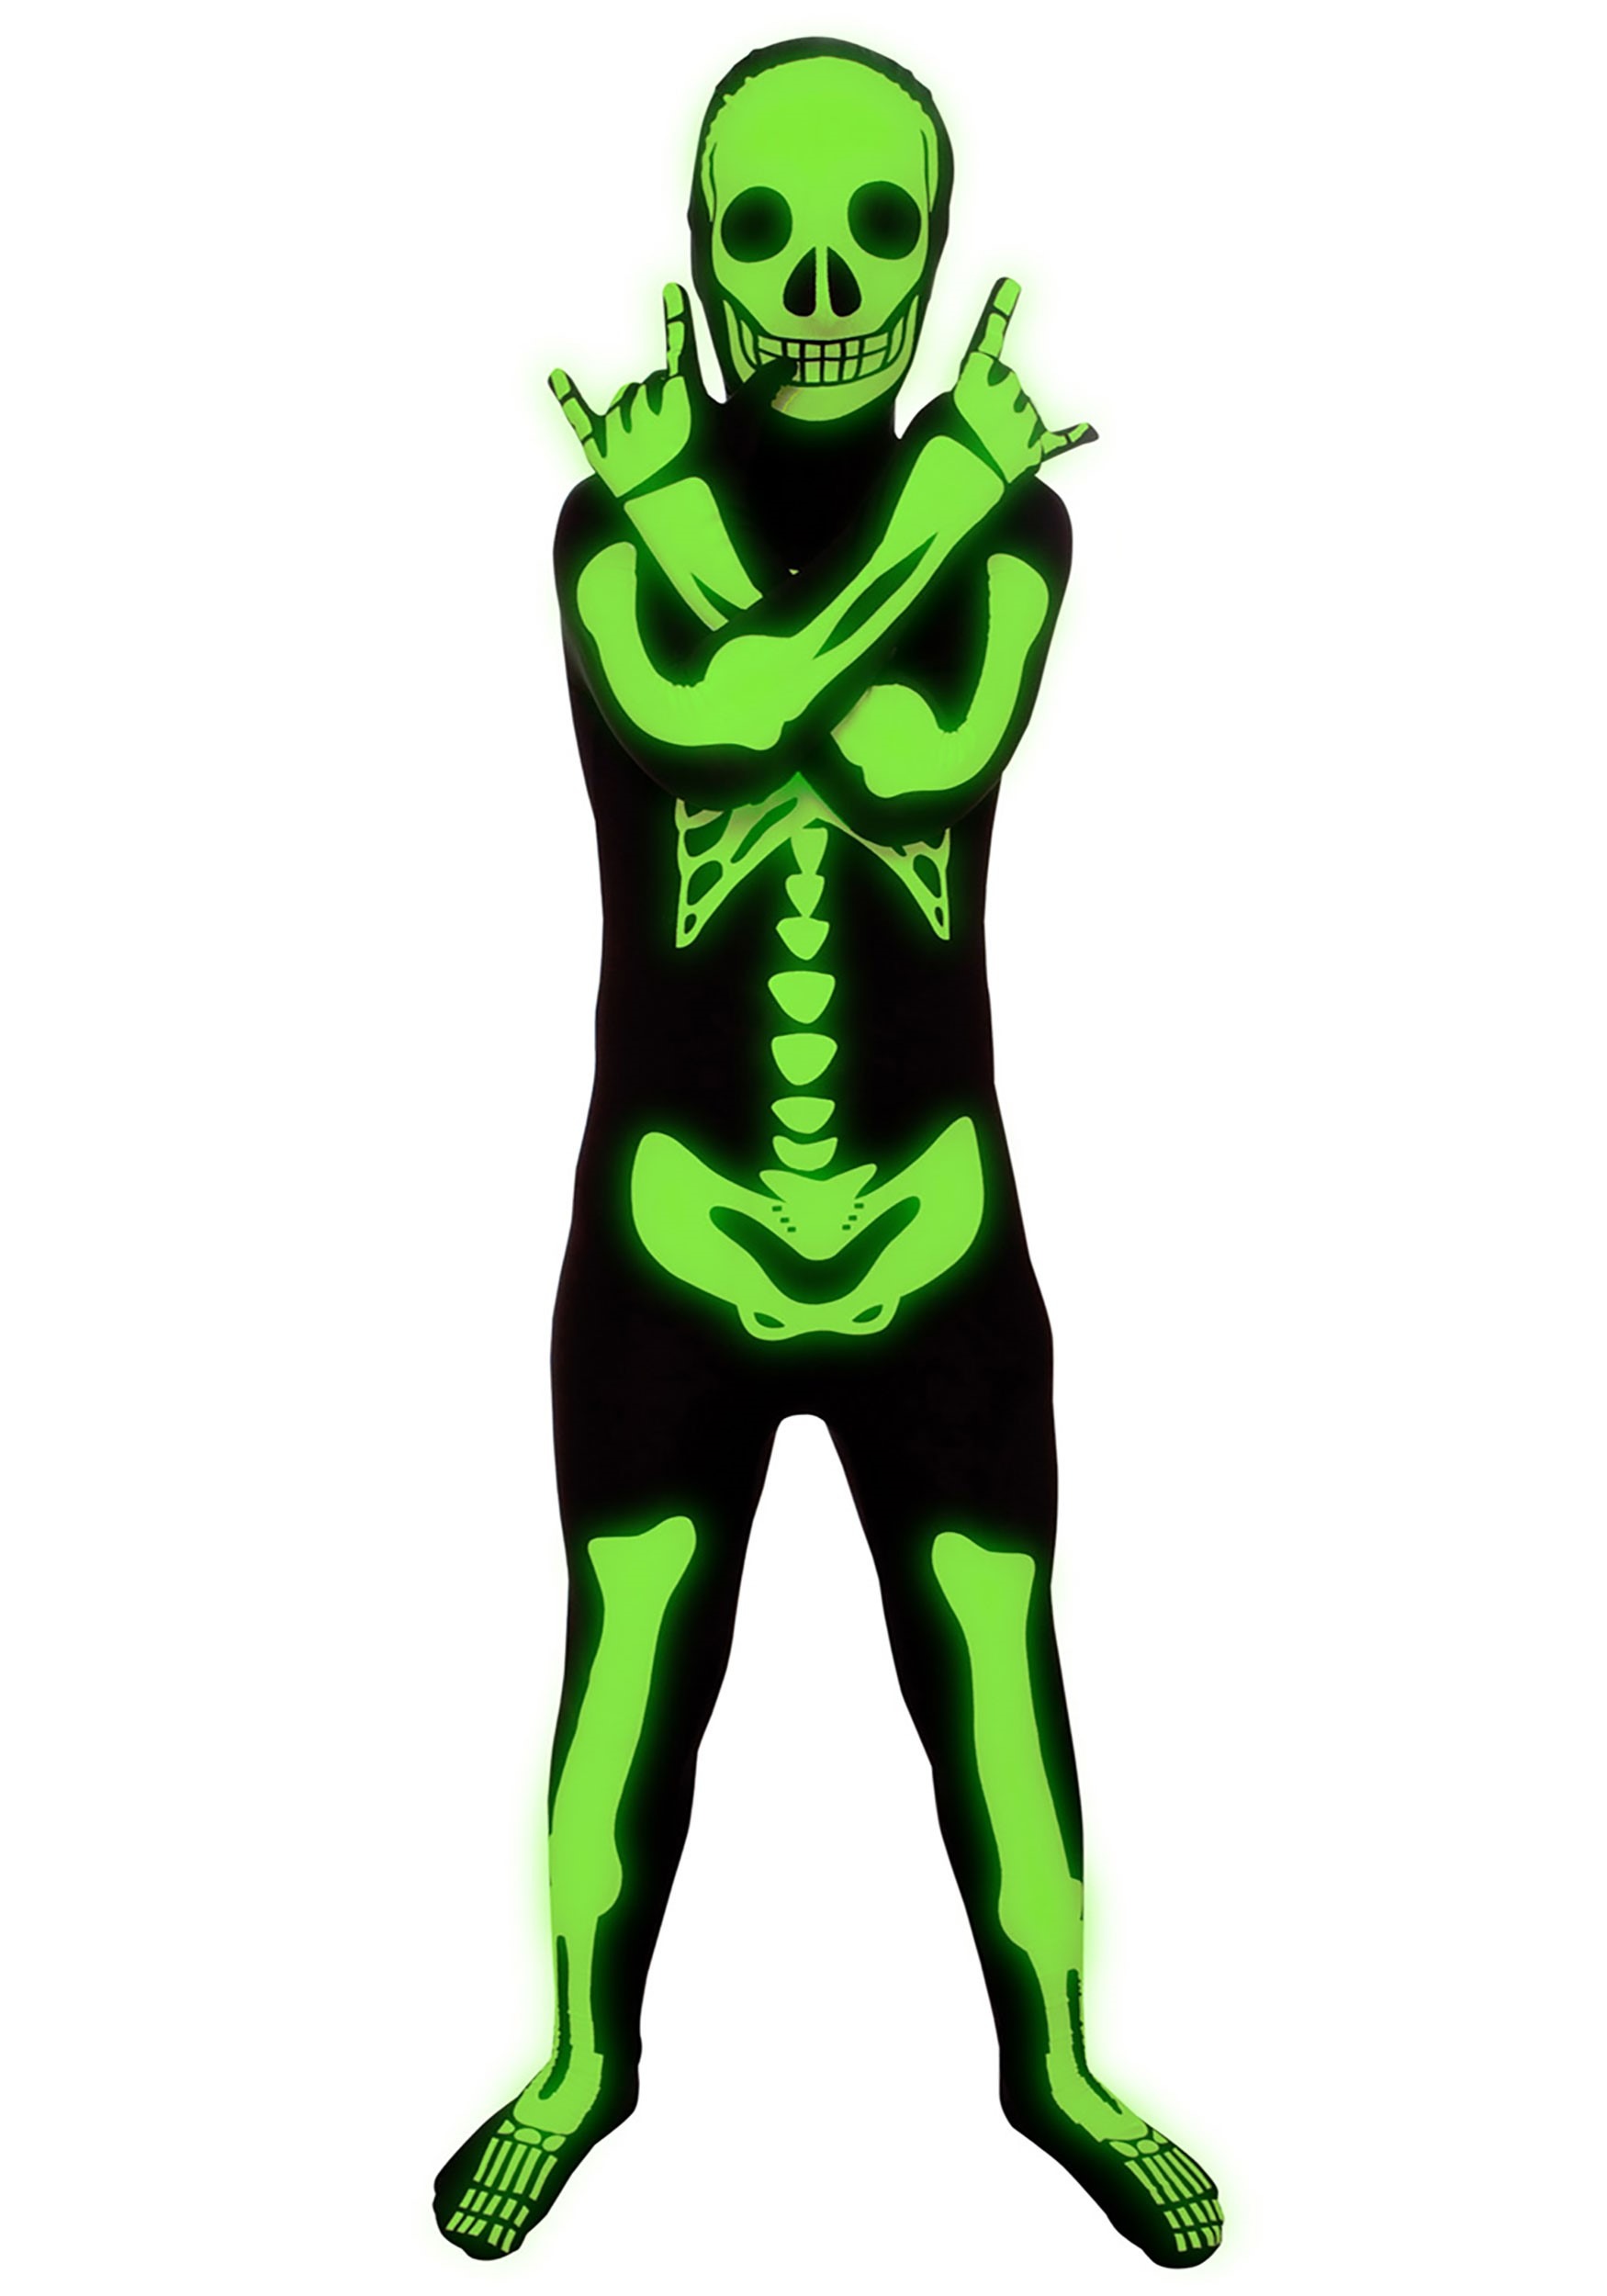 Kid’s Glow in the Dark Skeleton Costume